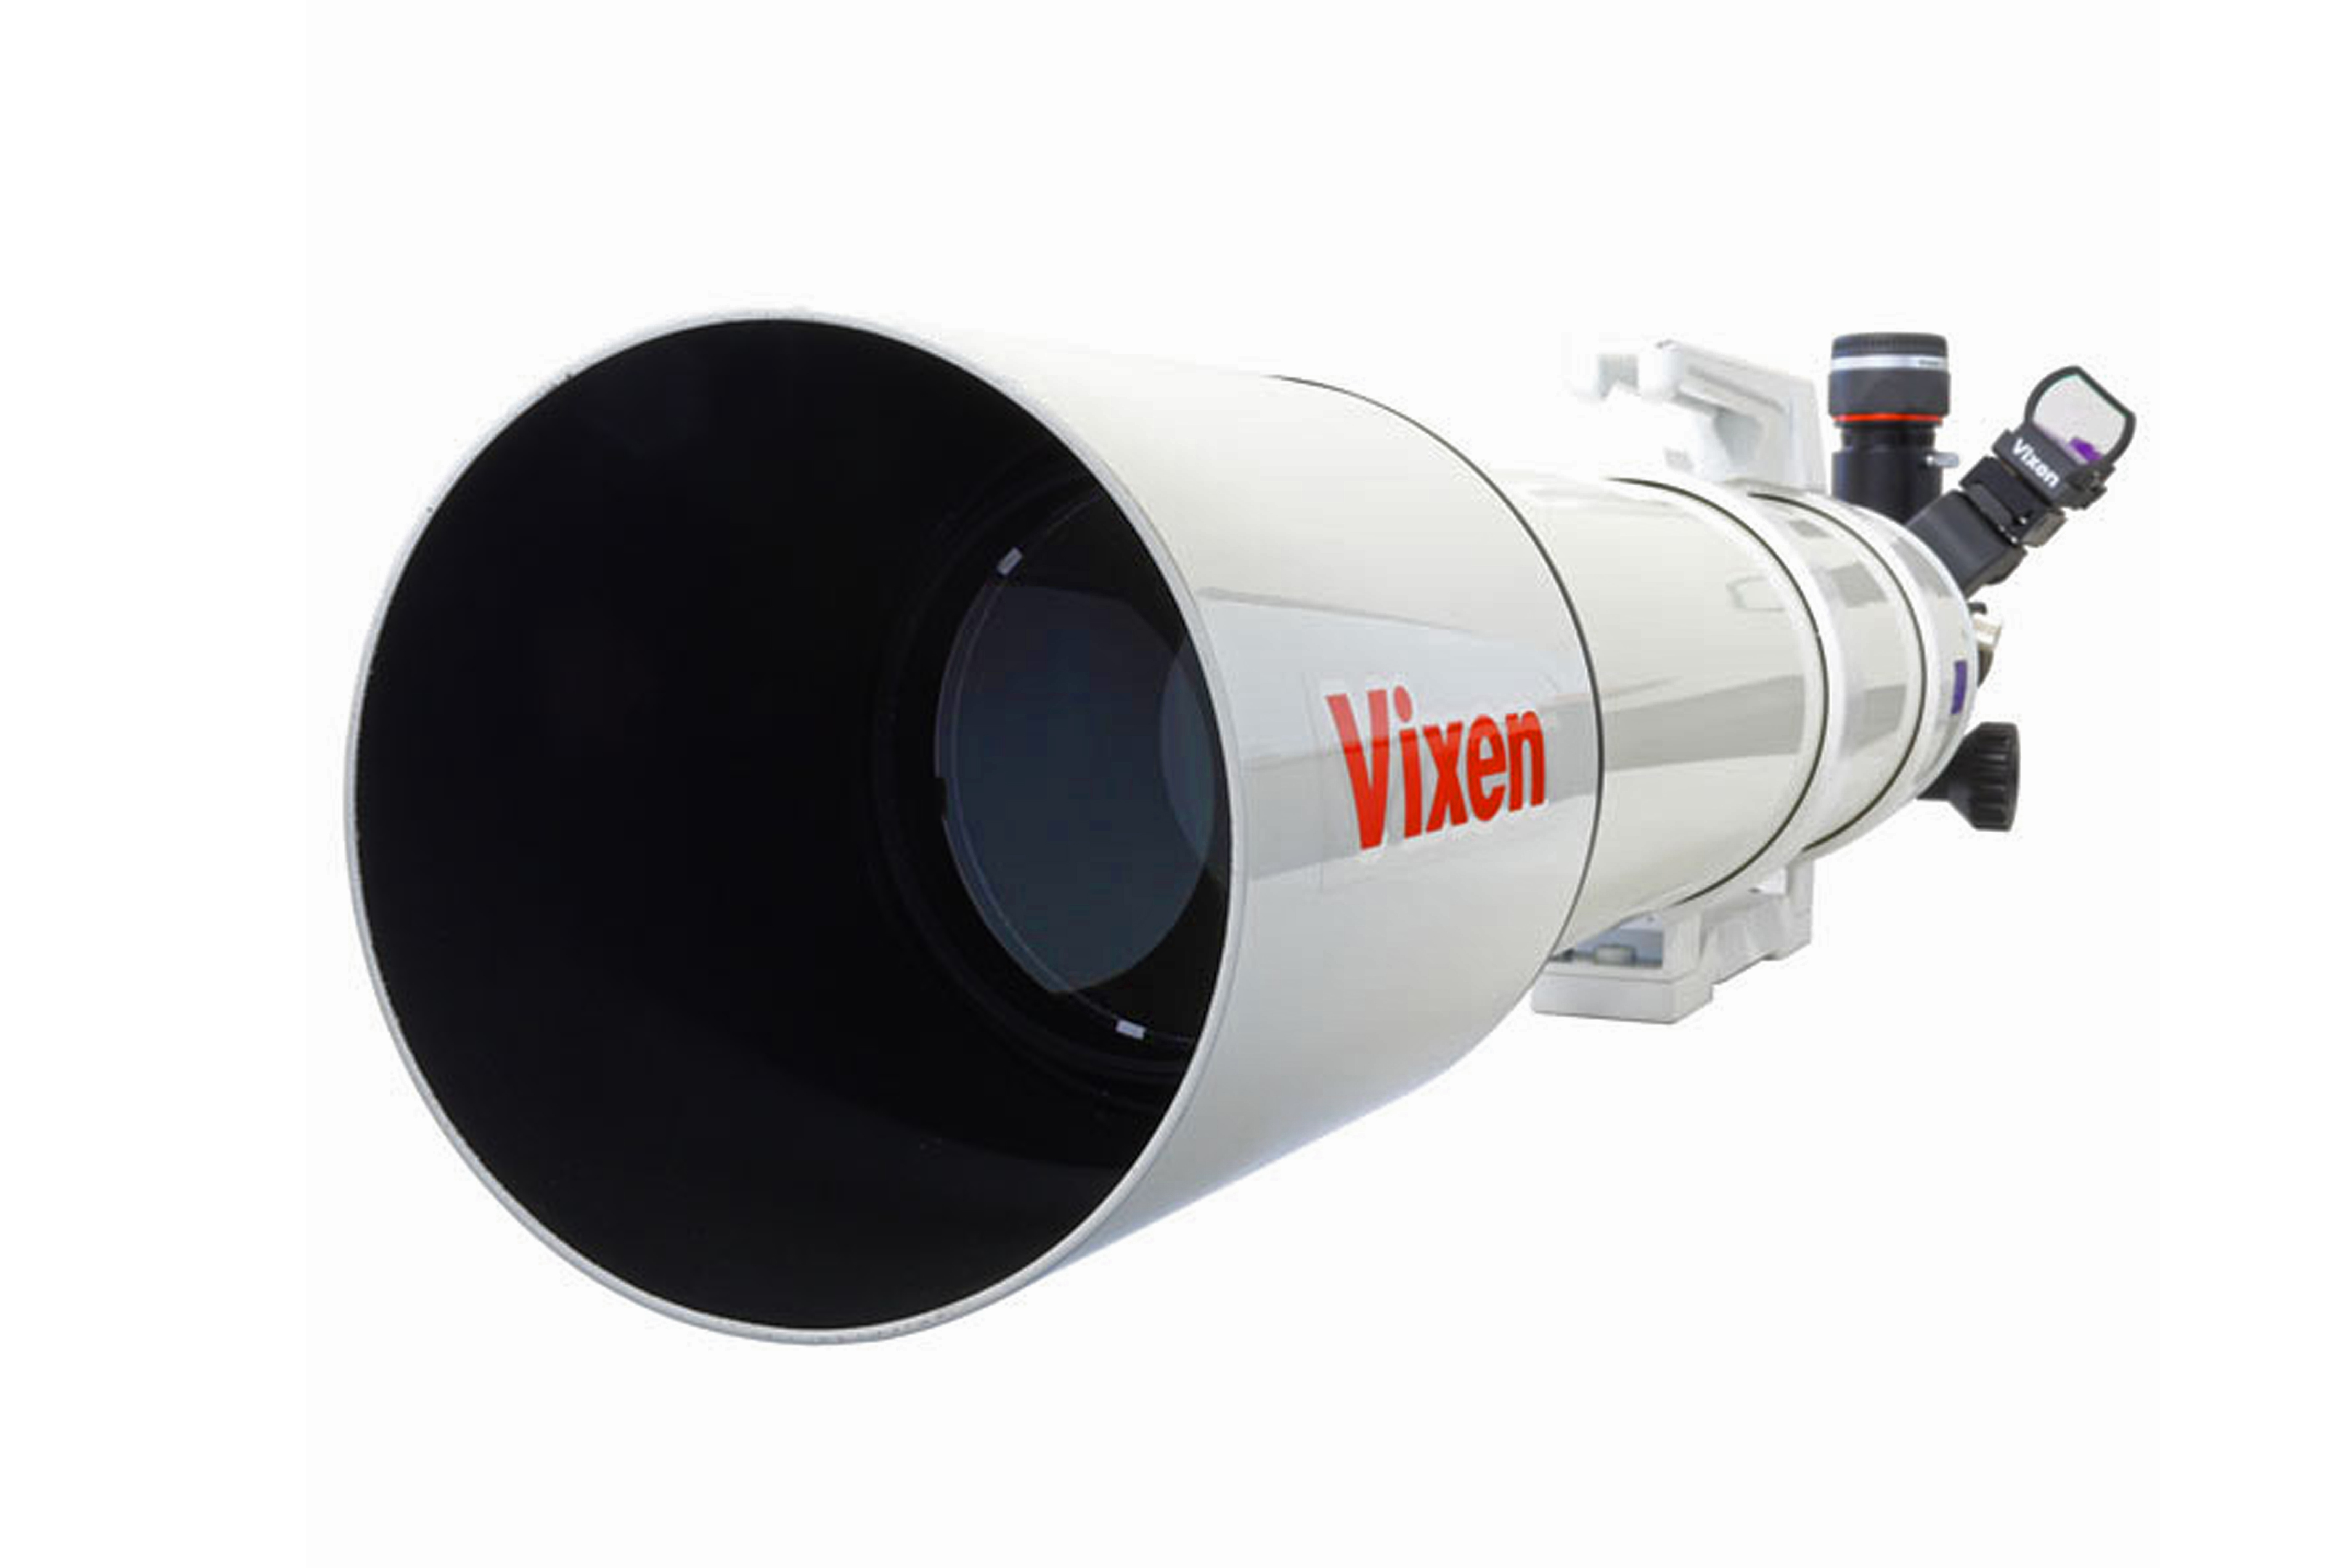 Conjunto de telescopio Vixen SX2WL A105M II